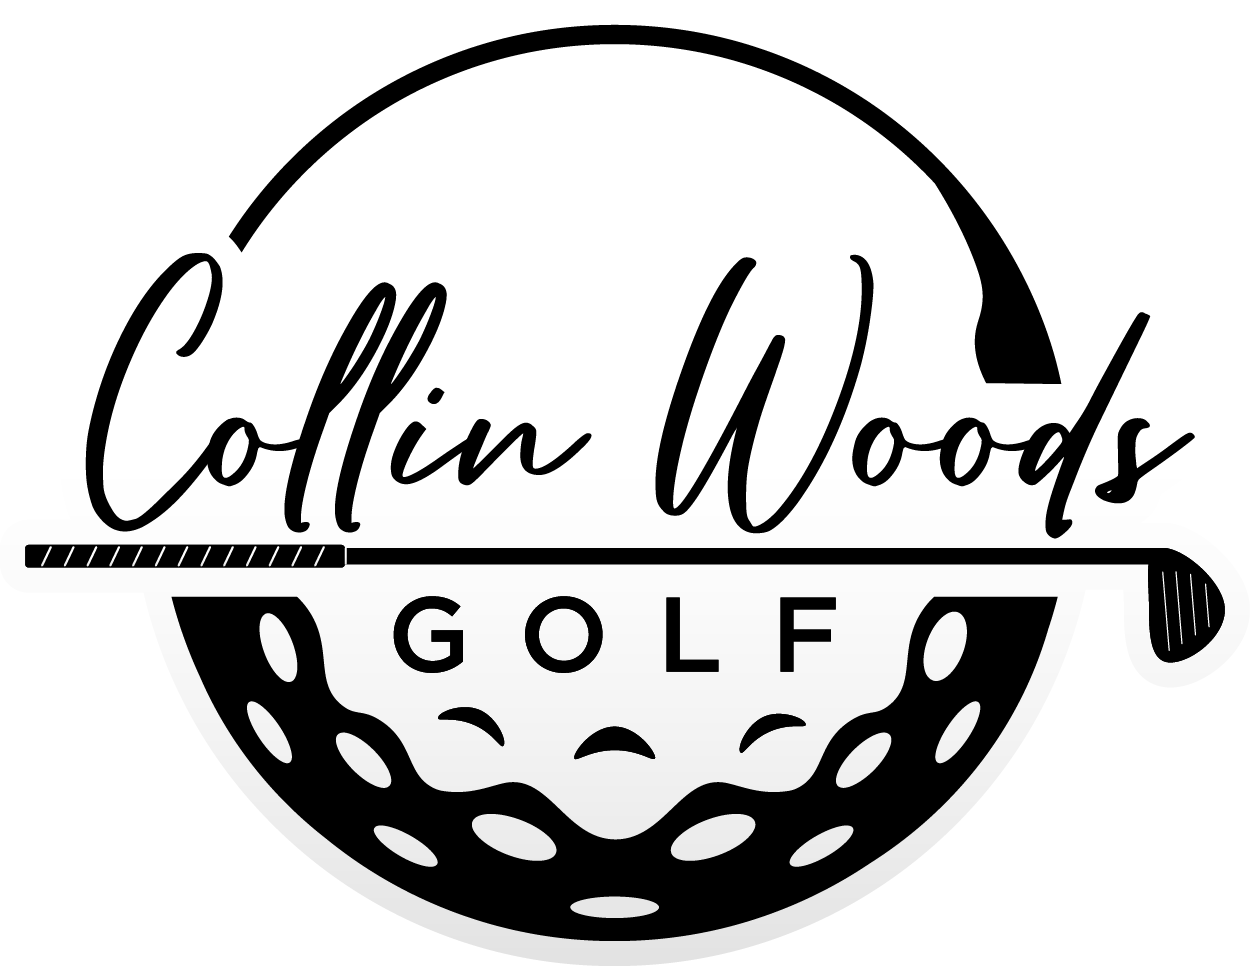 Collin Woods Golf